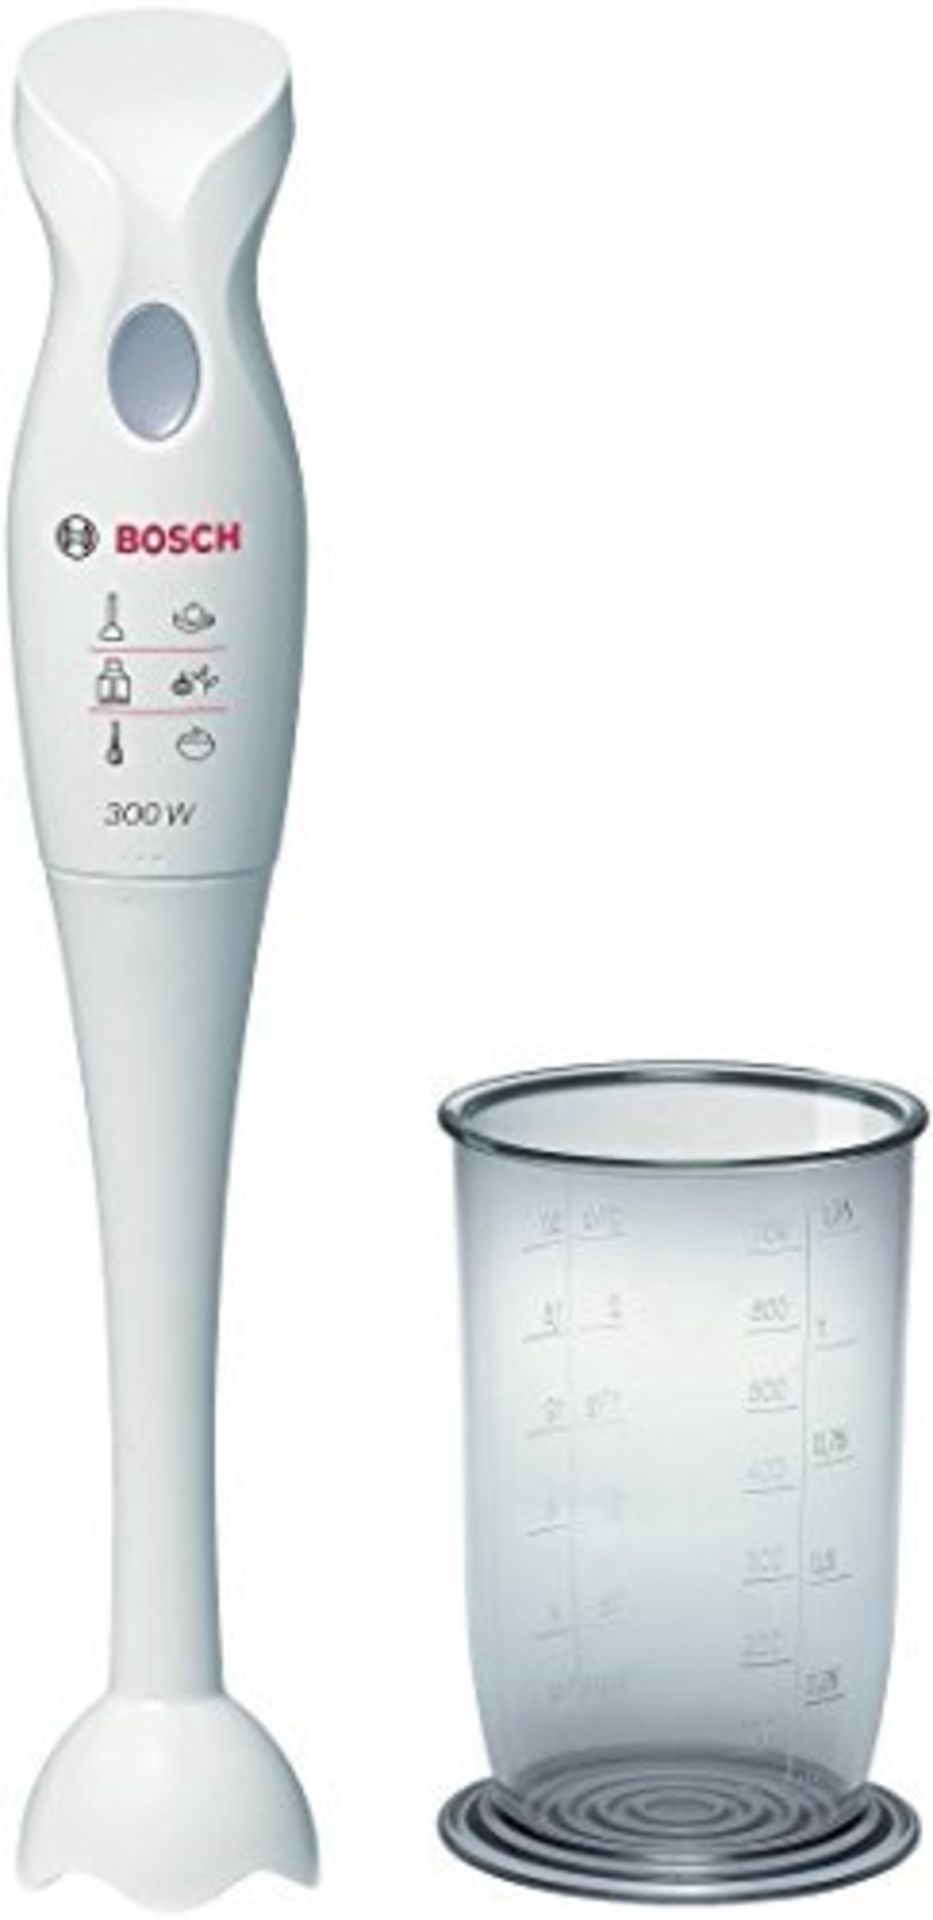 V Grade A Bosch 300W Hand Blender with Mixing Beaker ISP £24.99